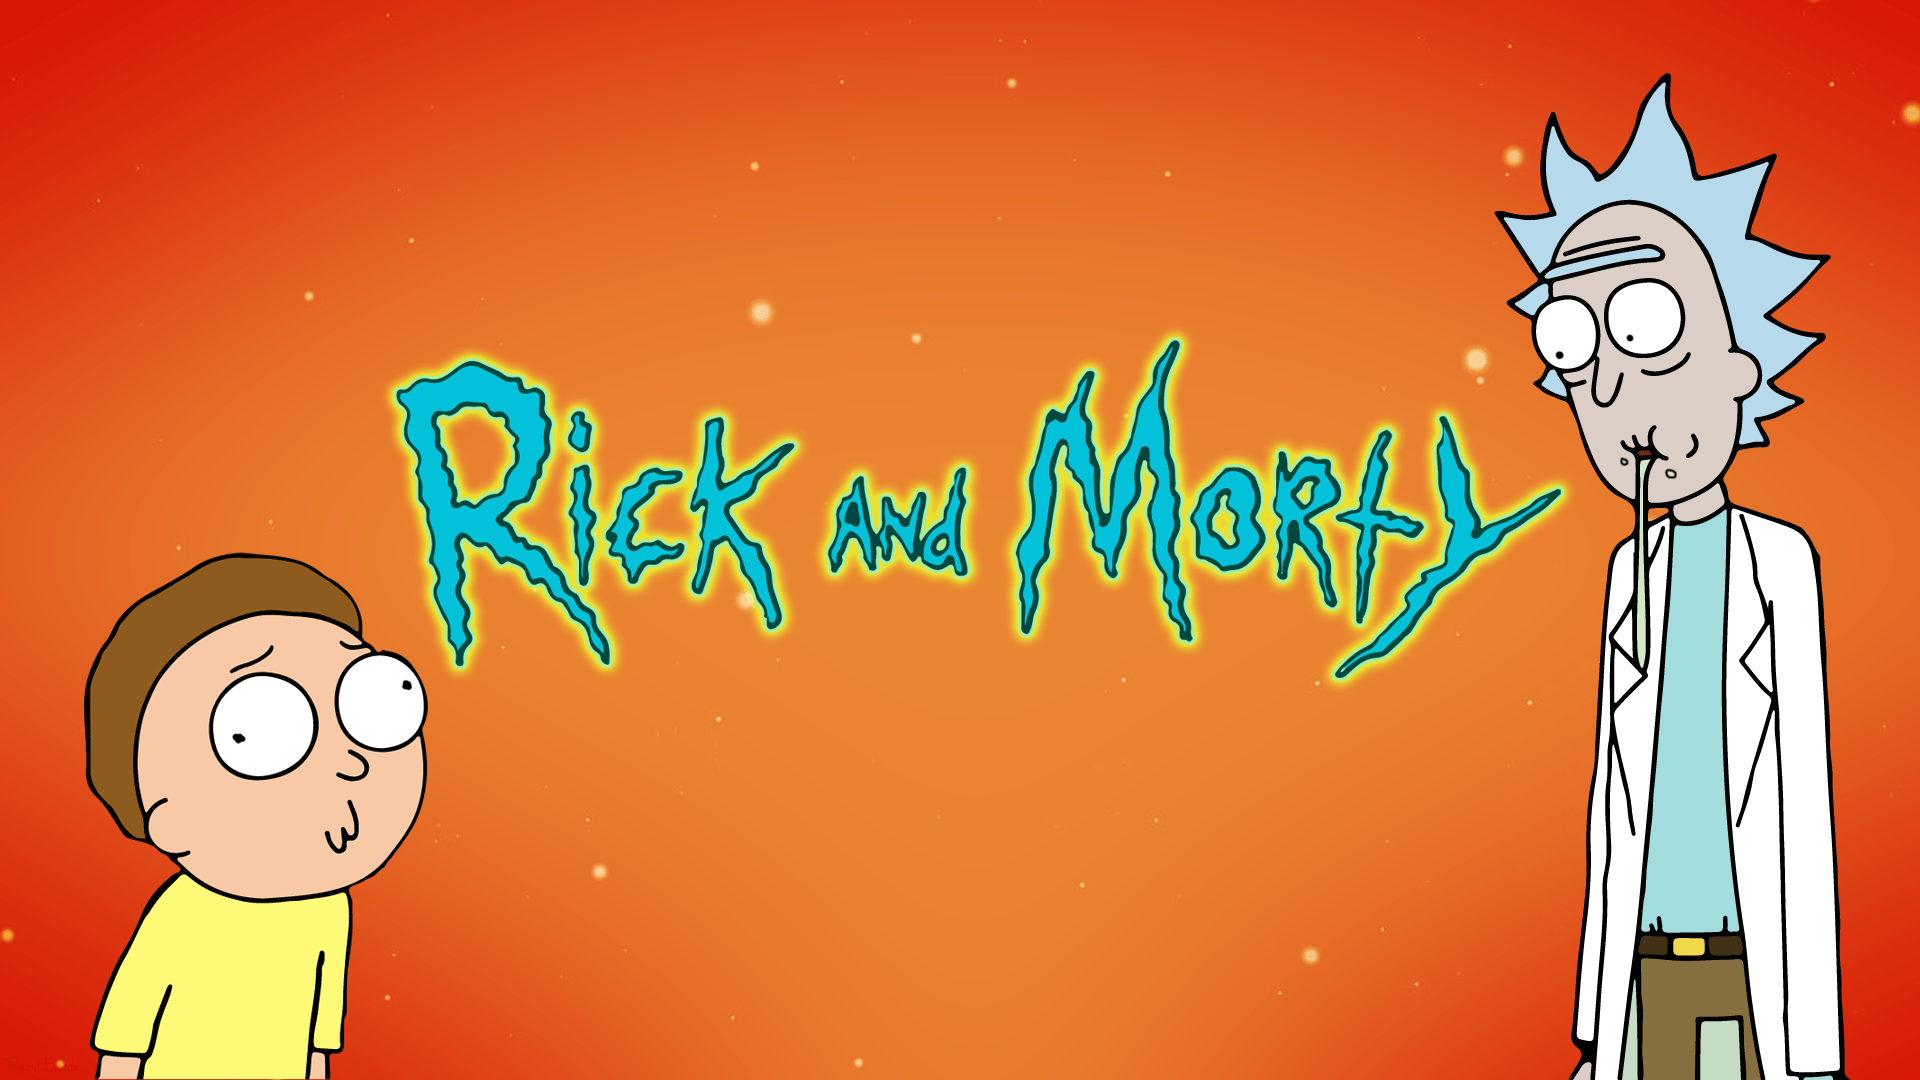 Rick and Morty Wallpaper, 1920x1080 .imgur.com